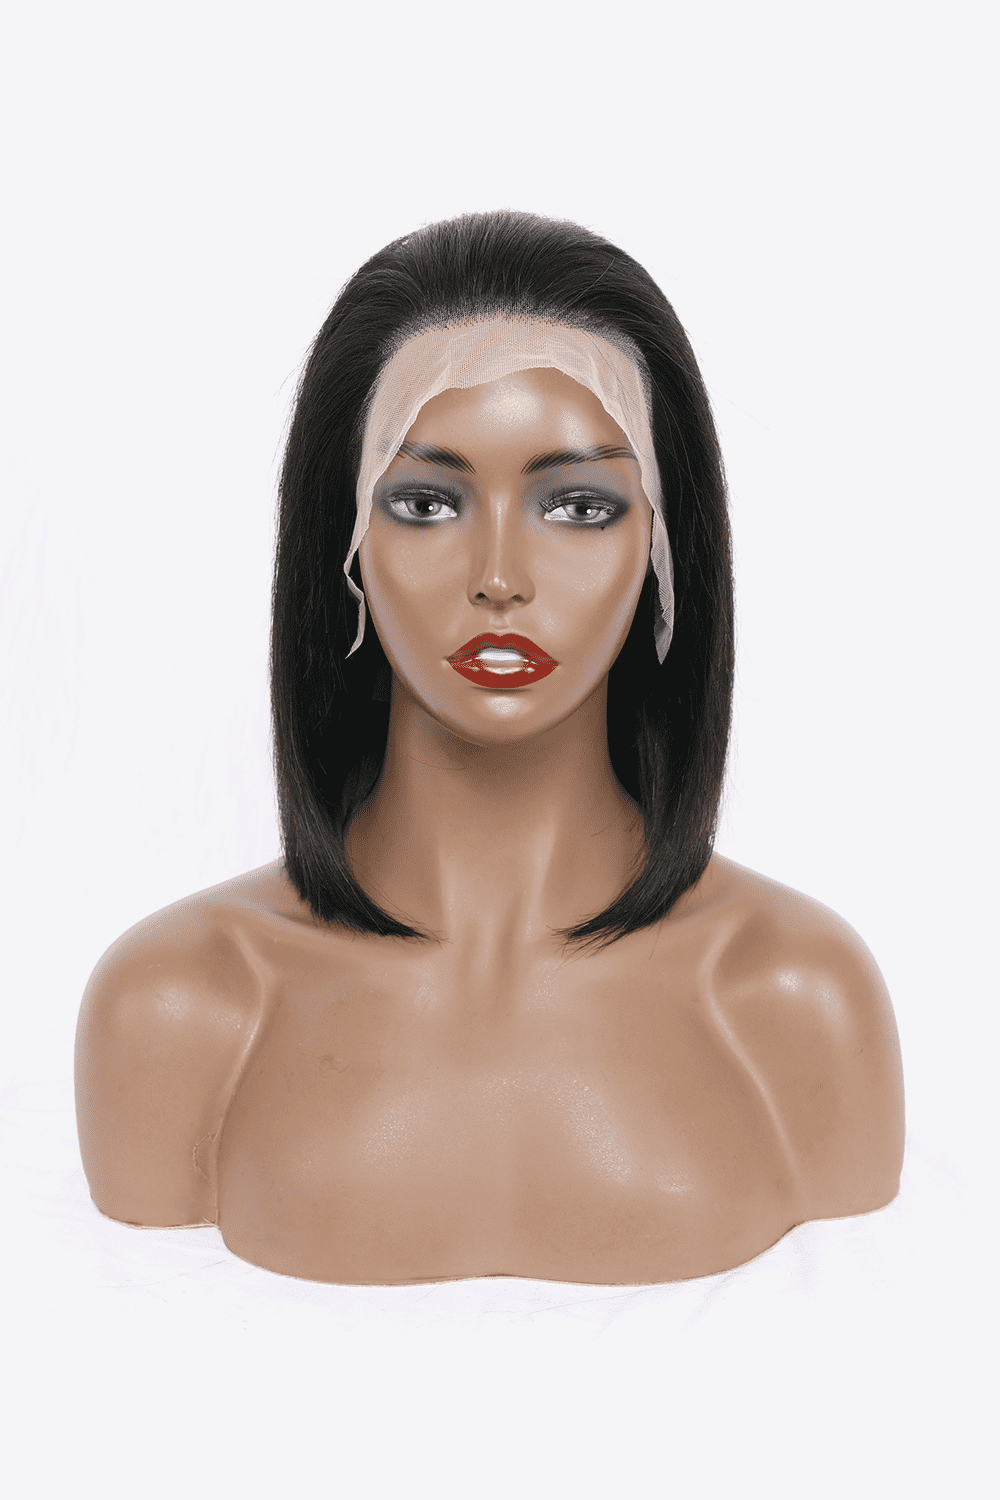 HUMAN HAIR 12" Black 140g Lace Front Wig Thick 150% Density Shoulder Length Bob